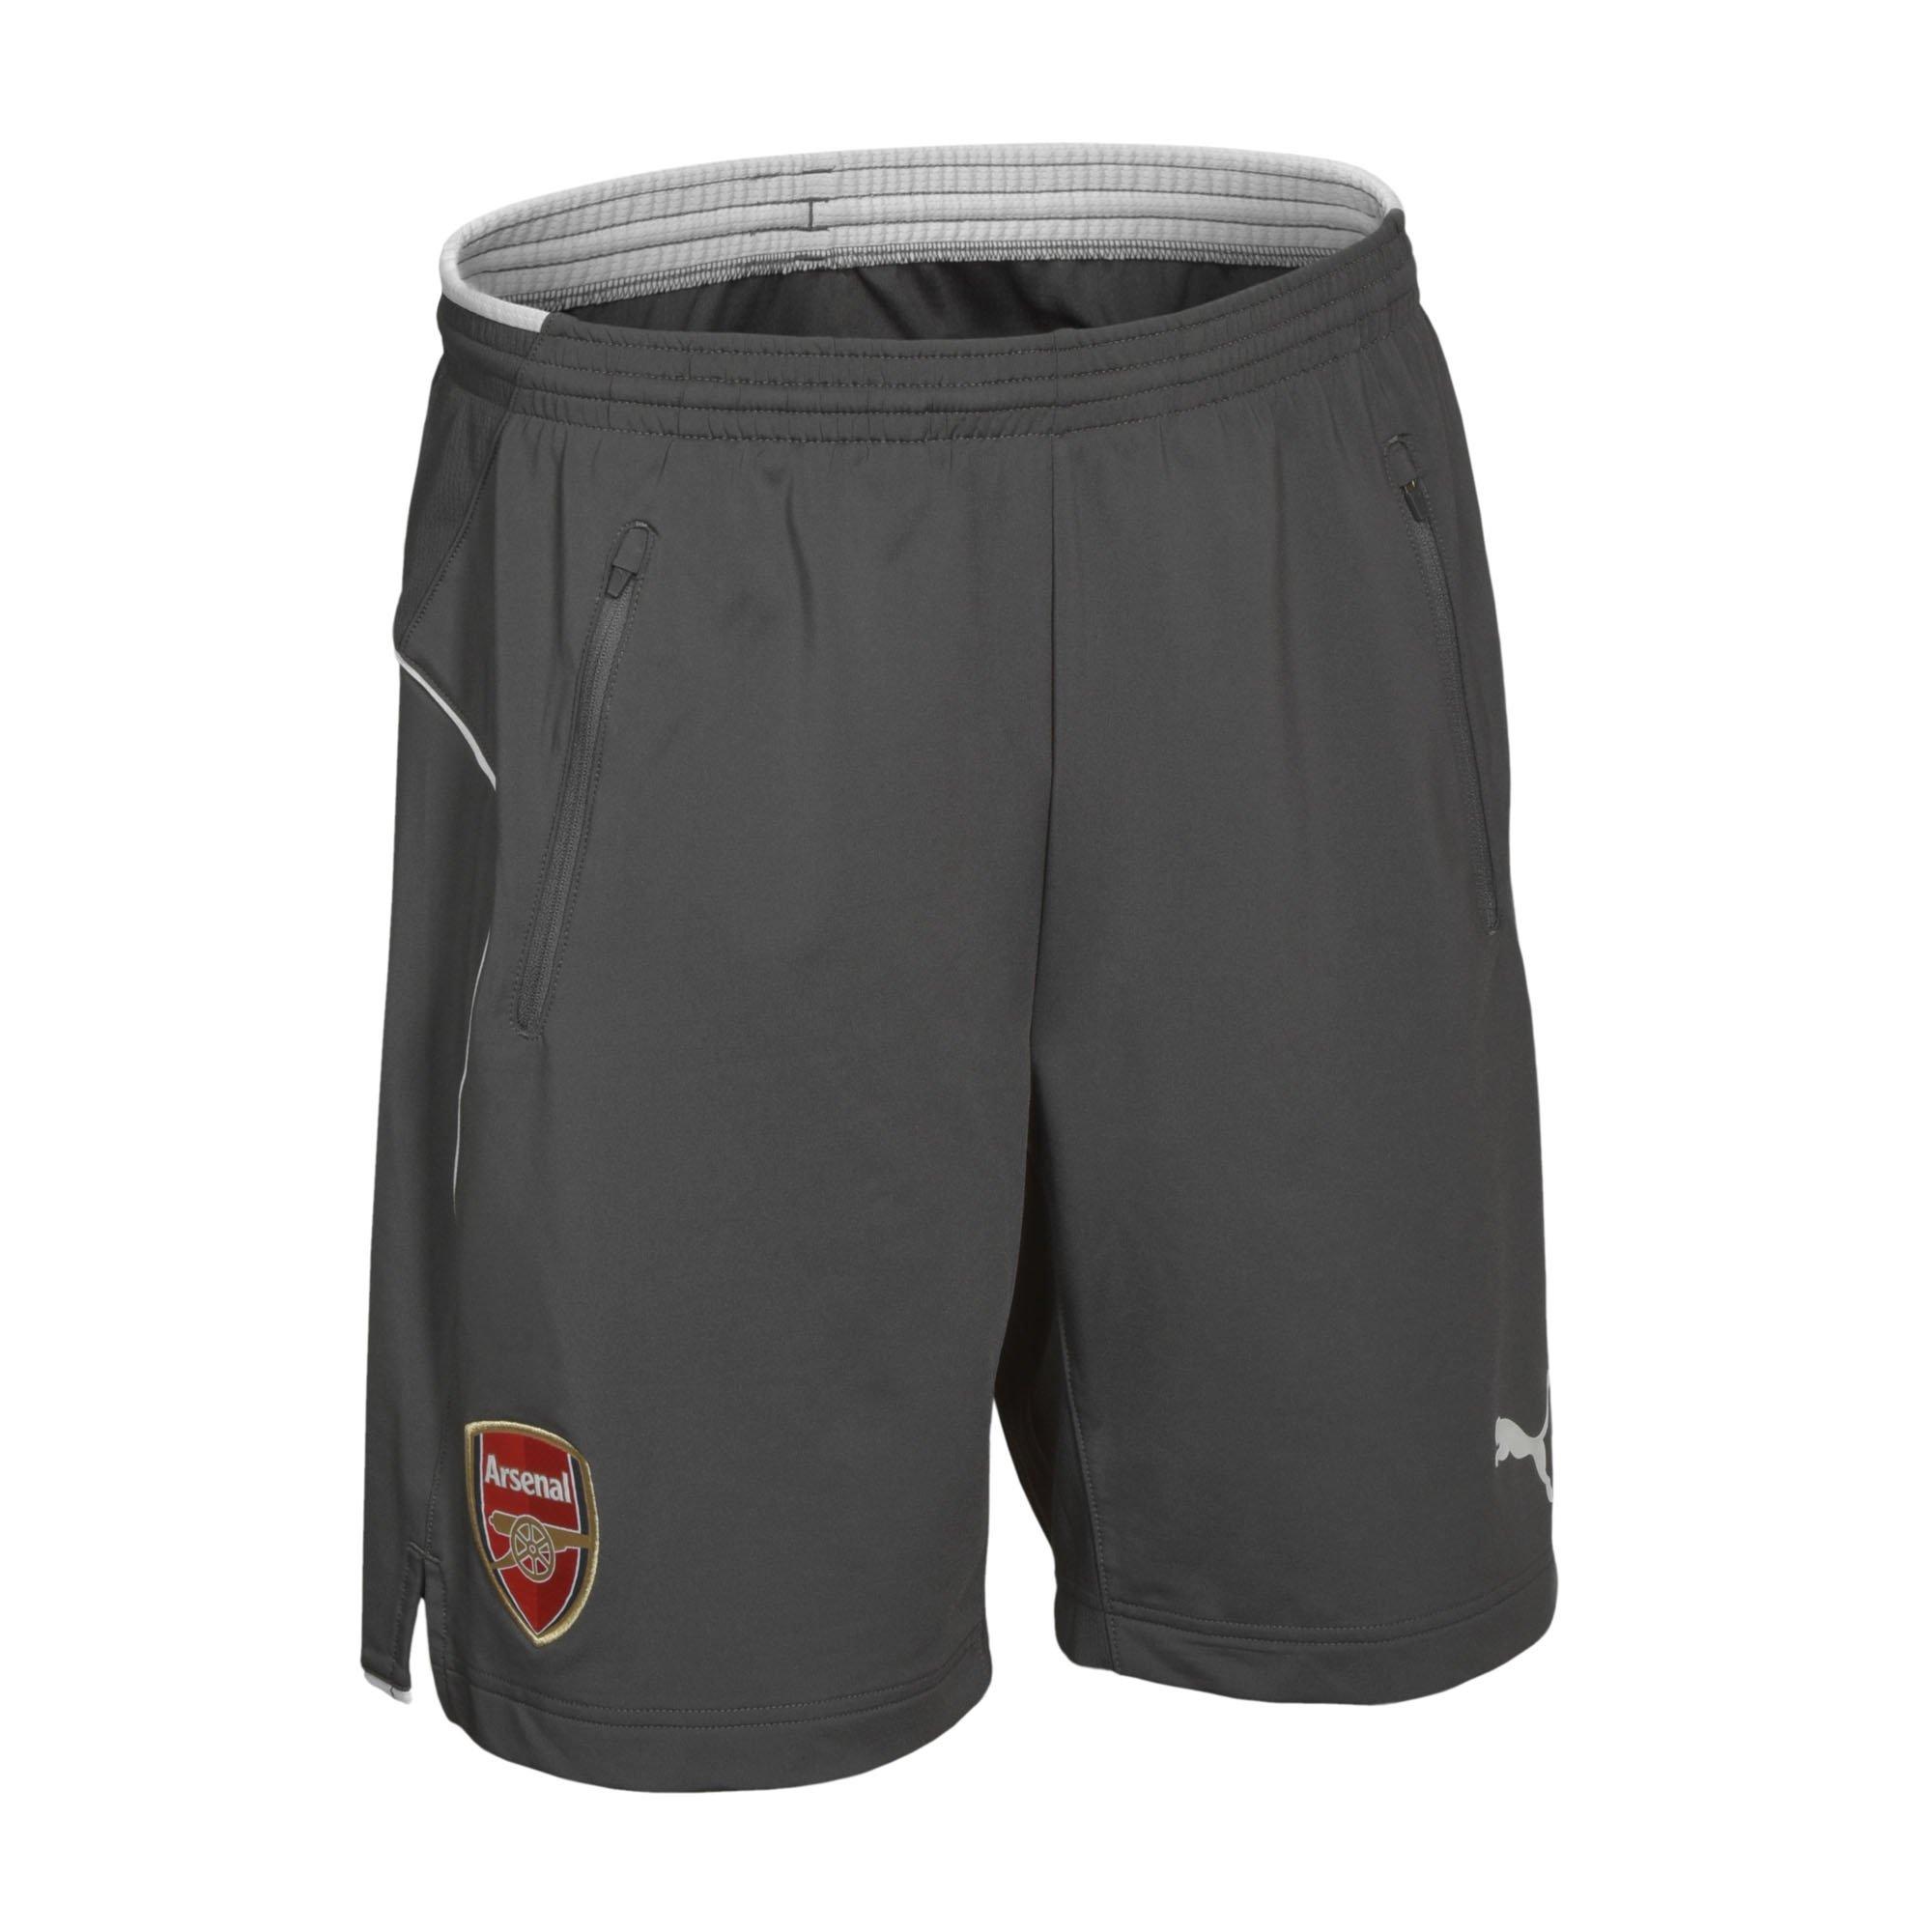 Arsenal 17/18 Men's Training Shorts 